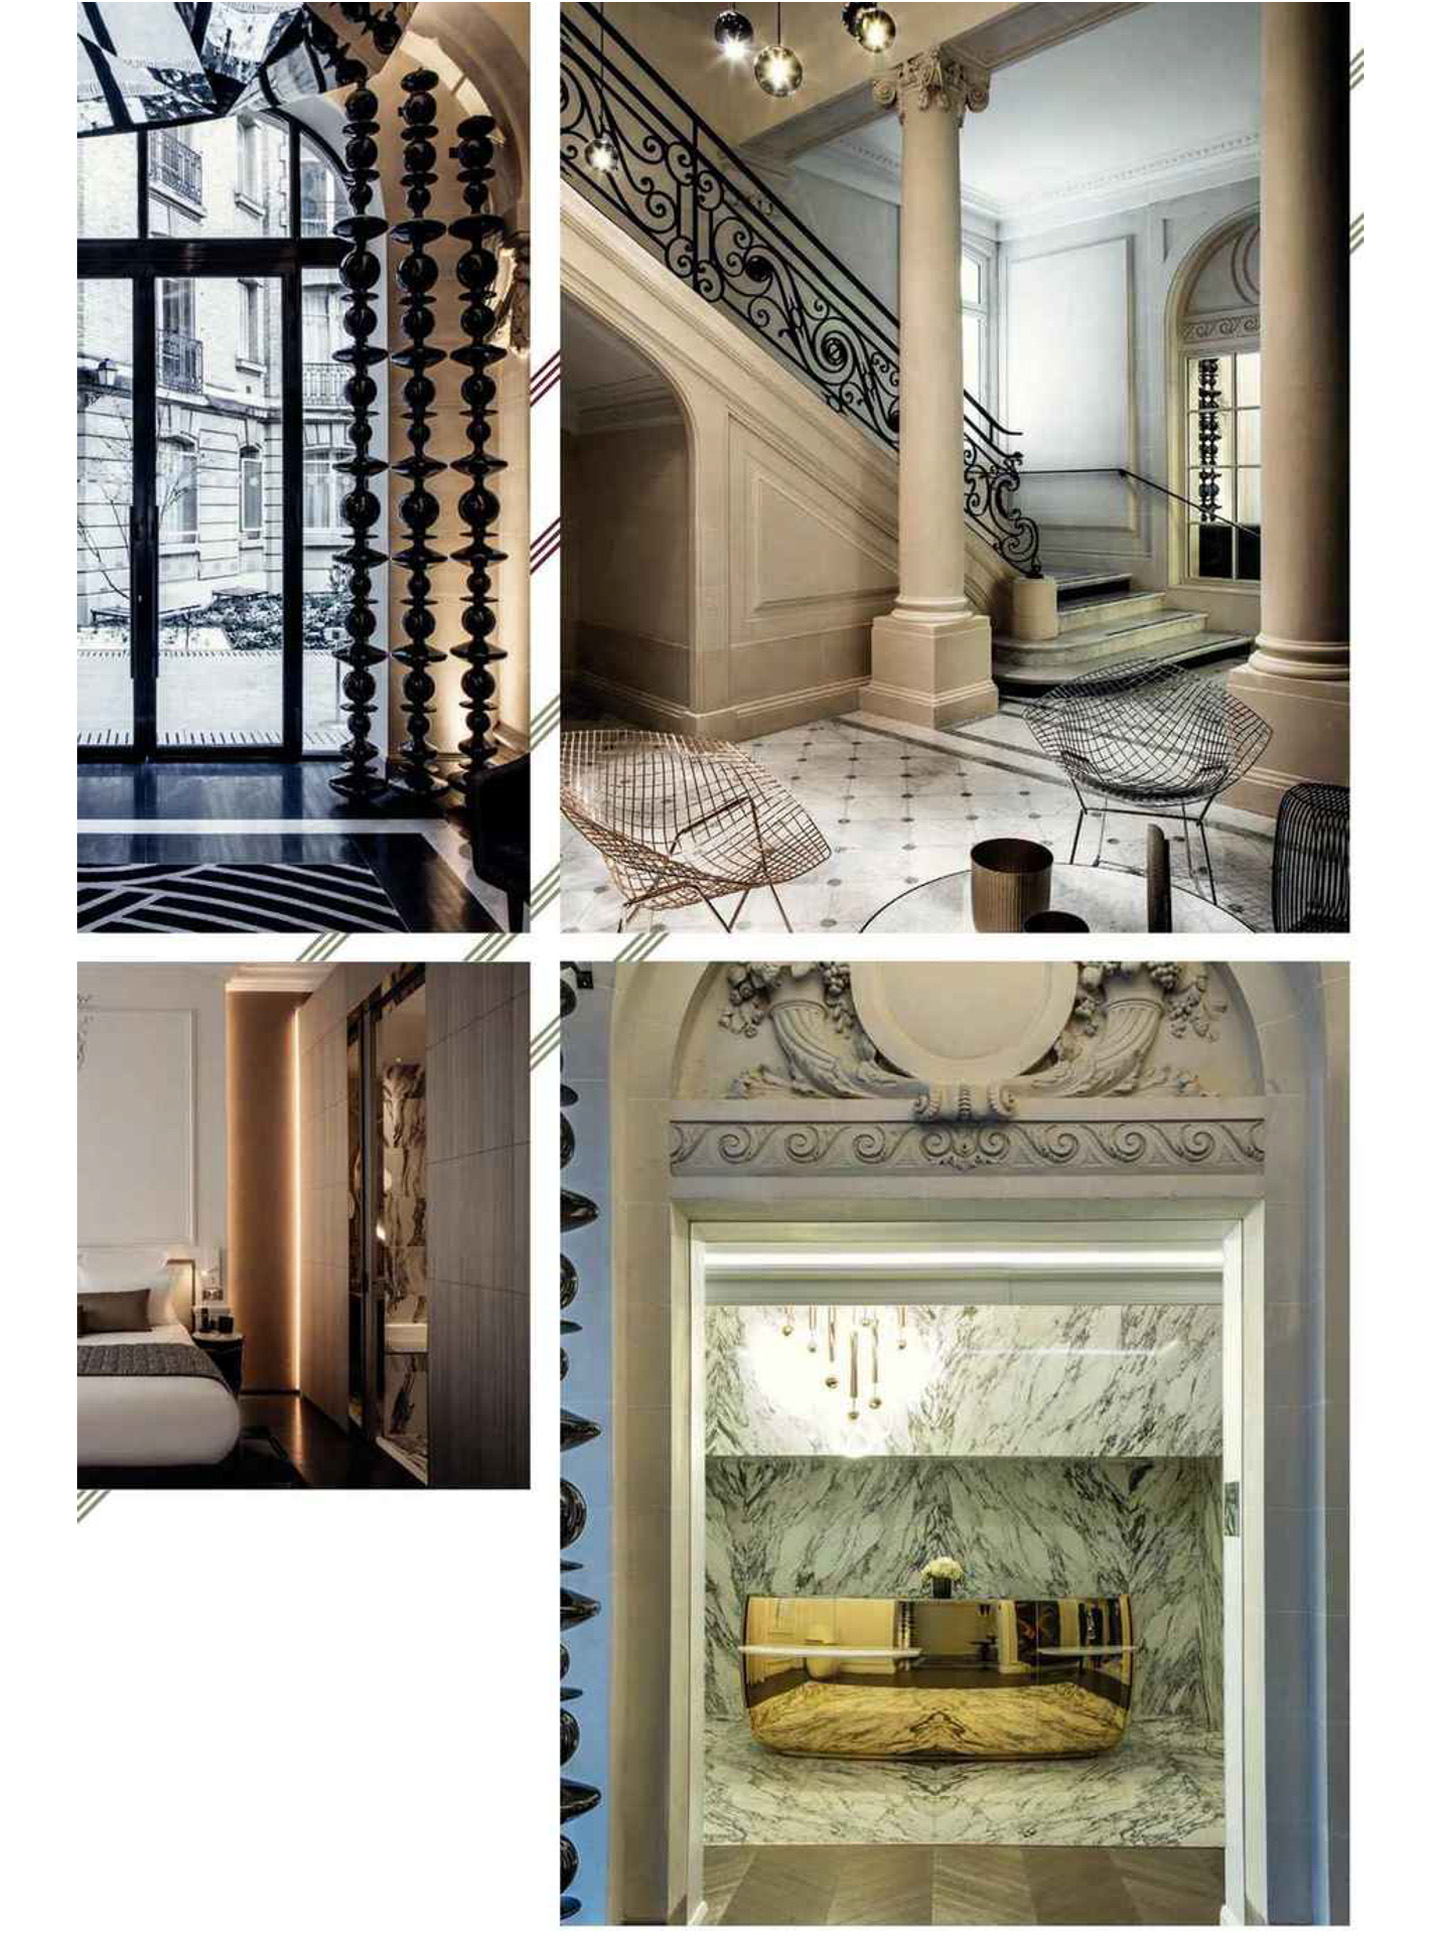 Article about la clef champs elysées paris realized by the studio jean-Philippe Nuel in the magazine domodéco, new lifestyle hotel, luxury interior design, paris center, french luxury hotel